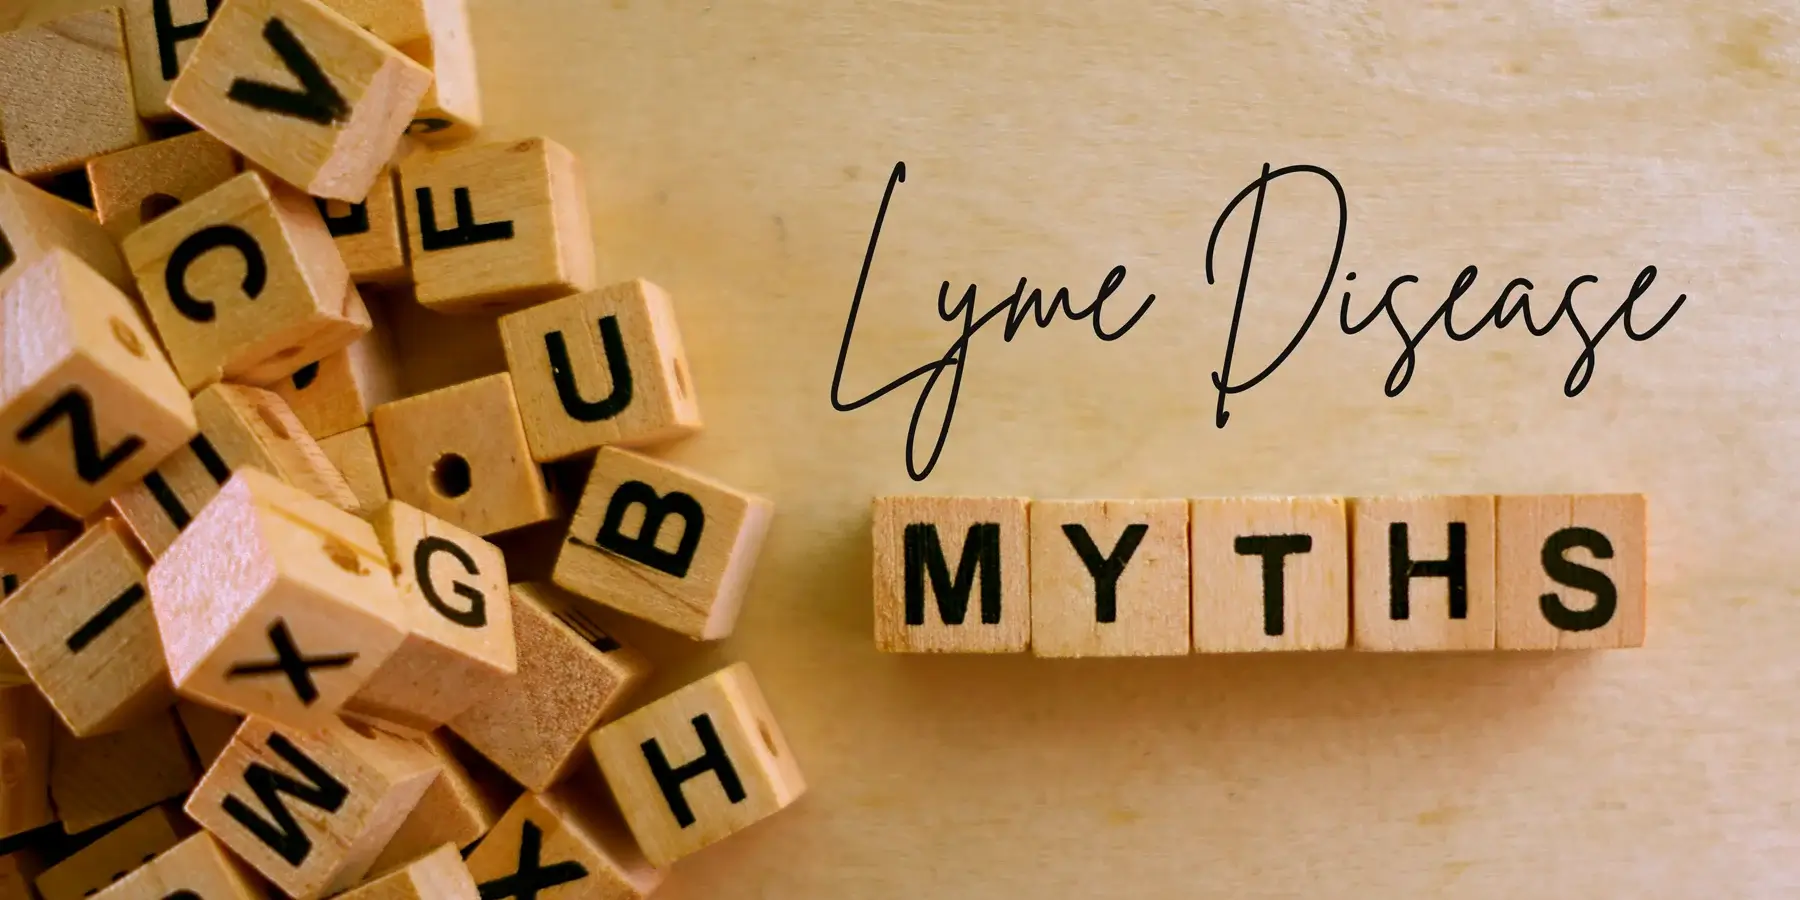 9 Myths about Lyme Disease